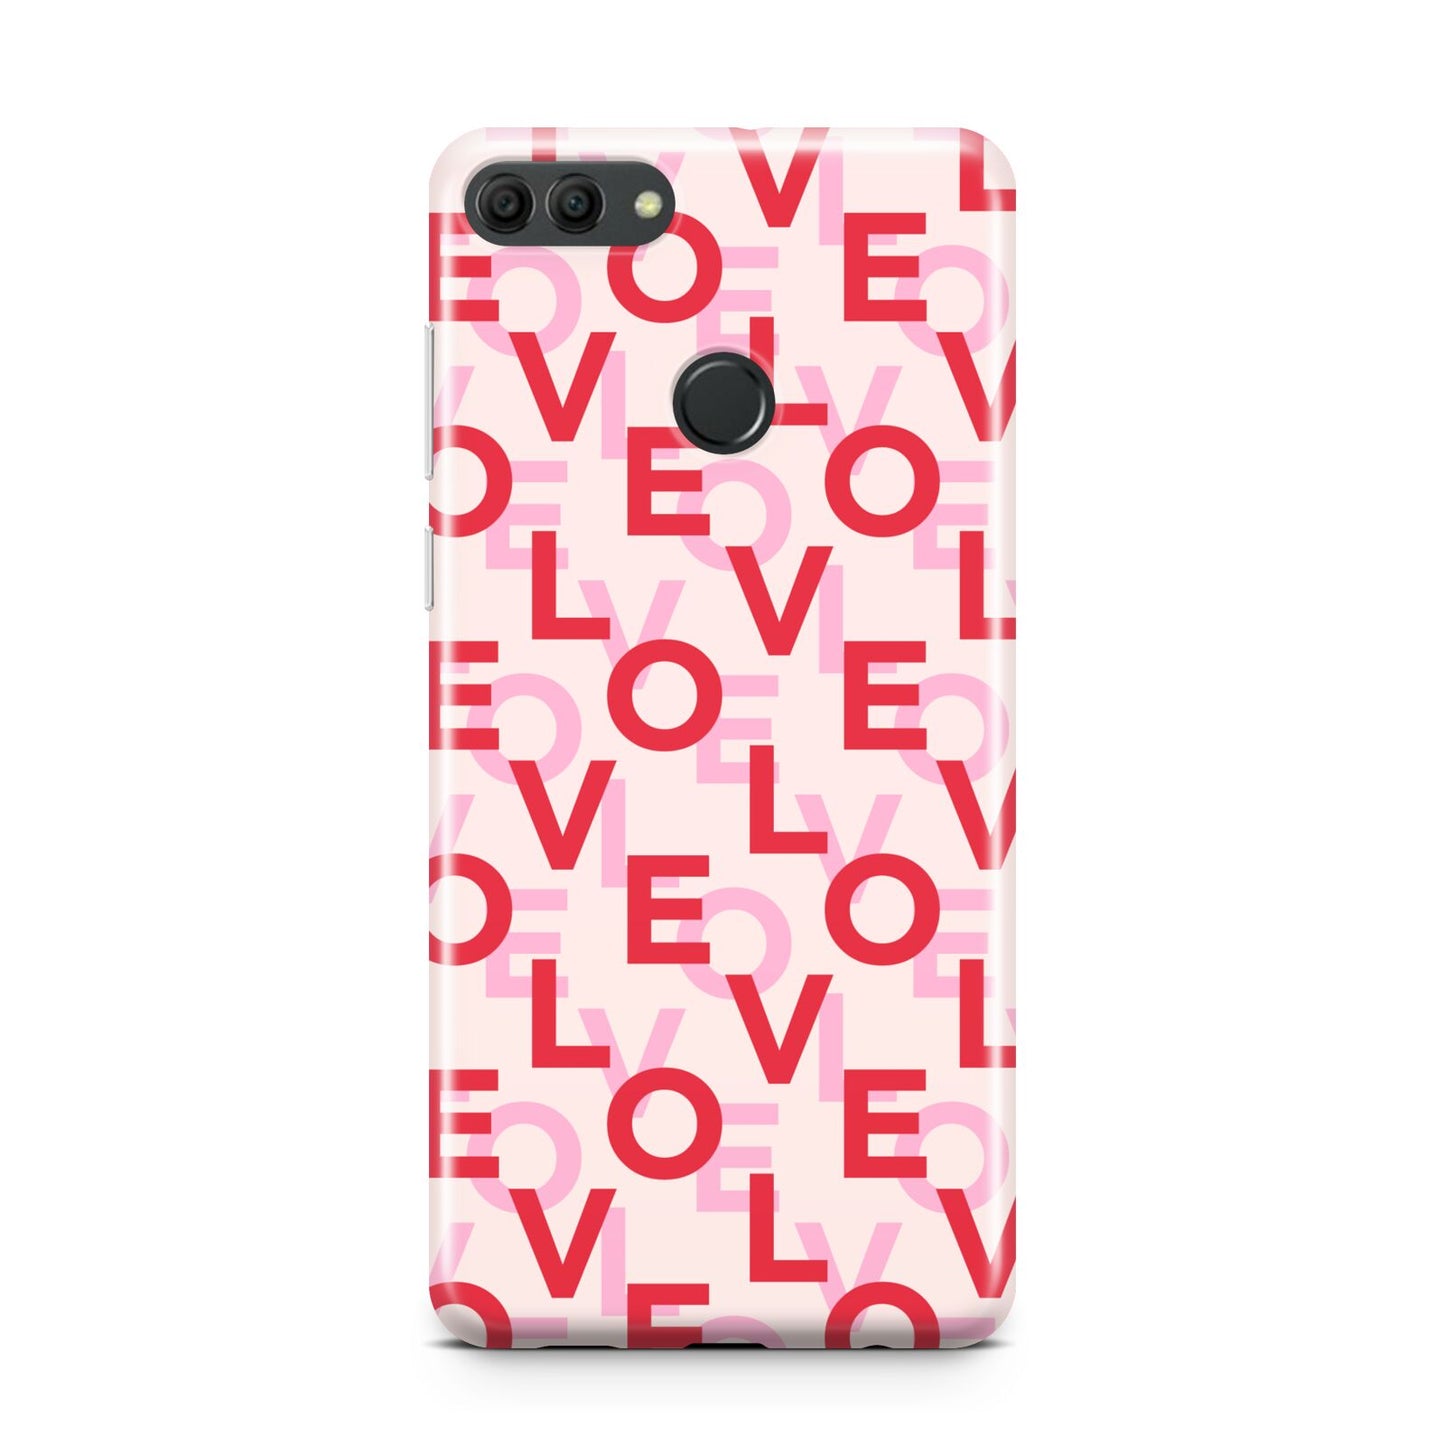 Love Valentine Huawei Y9 2018